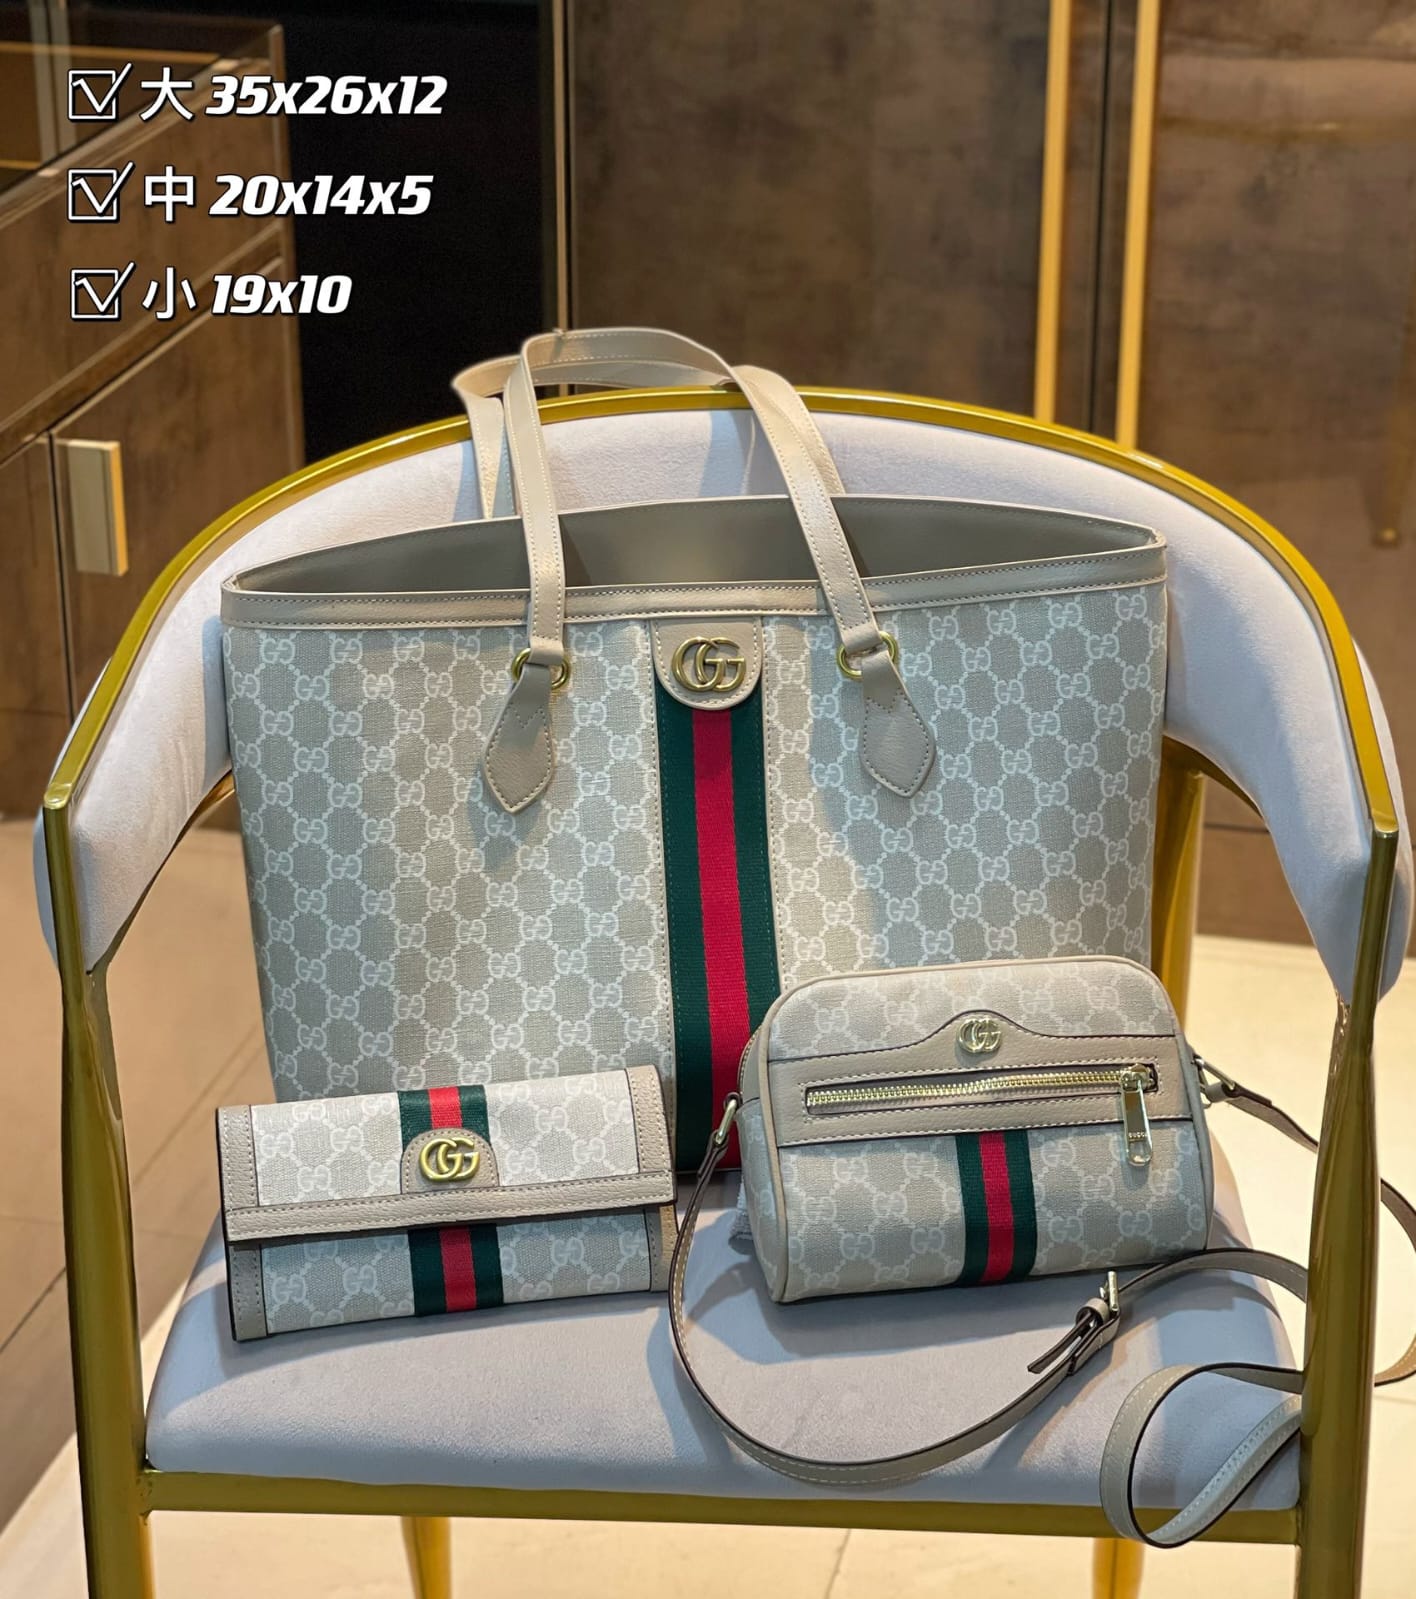 Gucci Ophidia Tote Handbag Sets